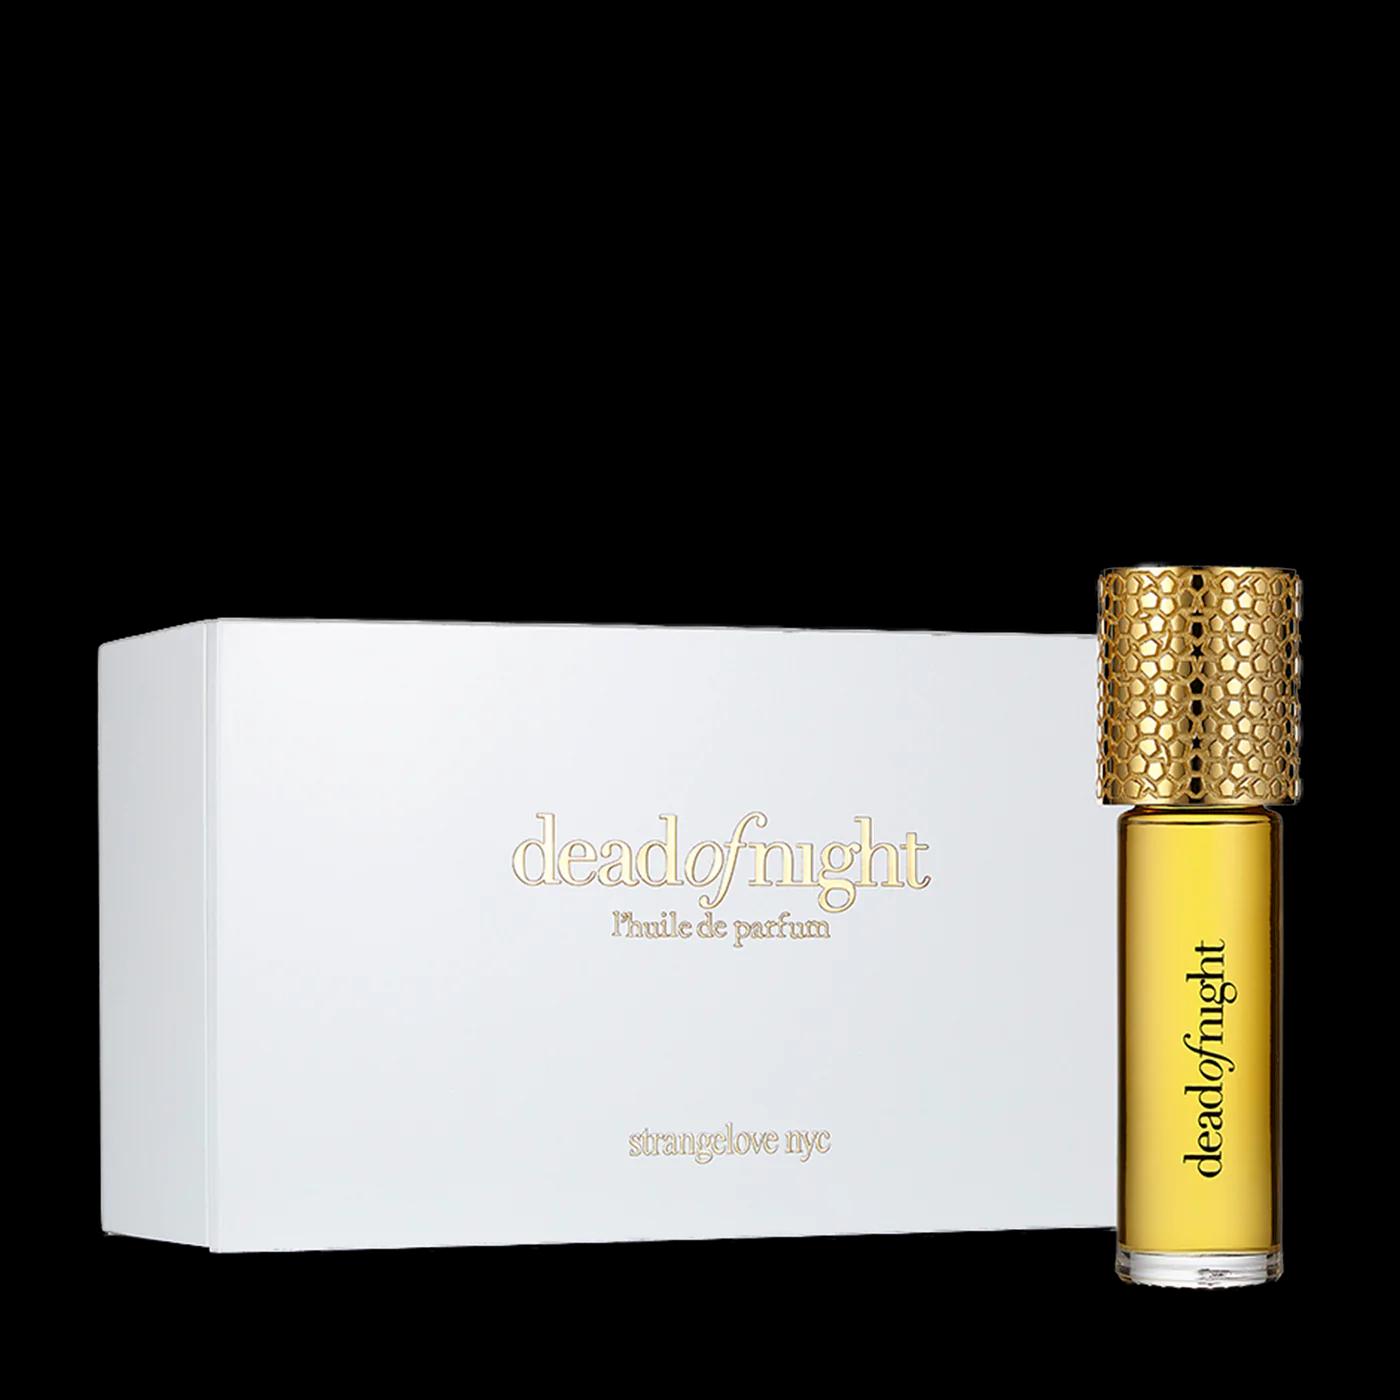 deadofnight - 10ml pure perfume oil with box | Perfume Lounge